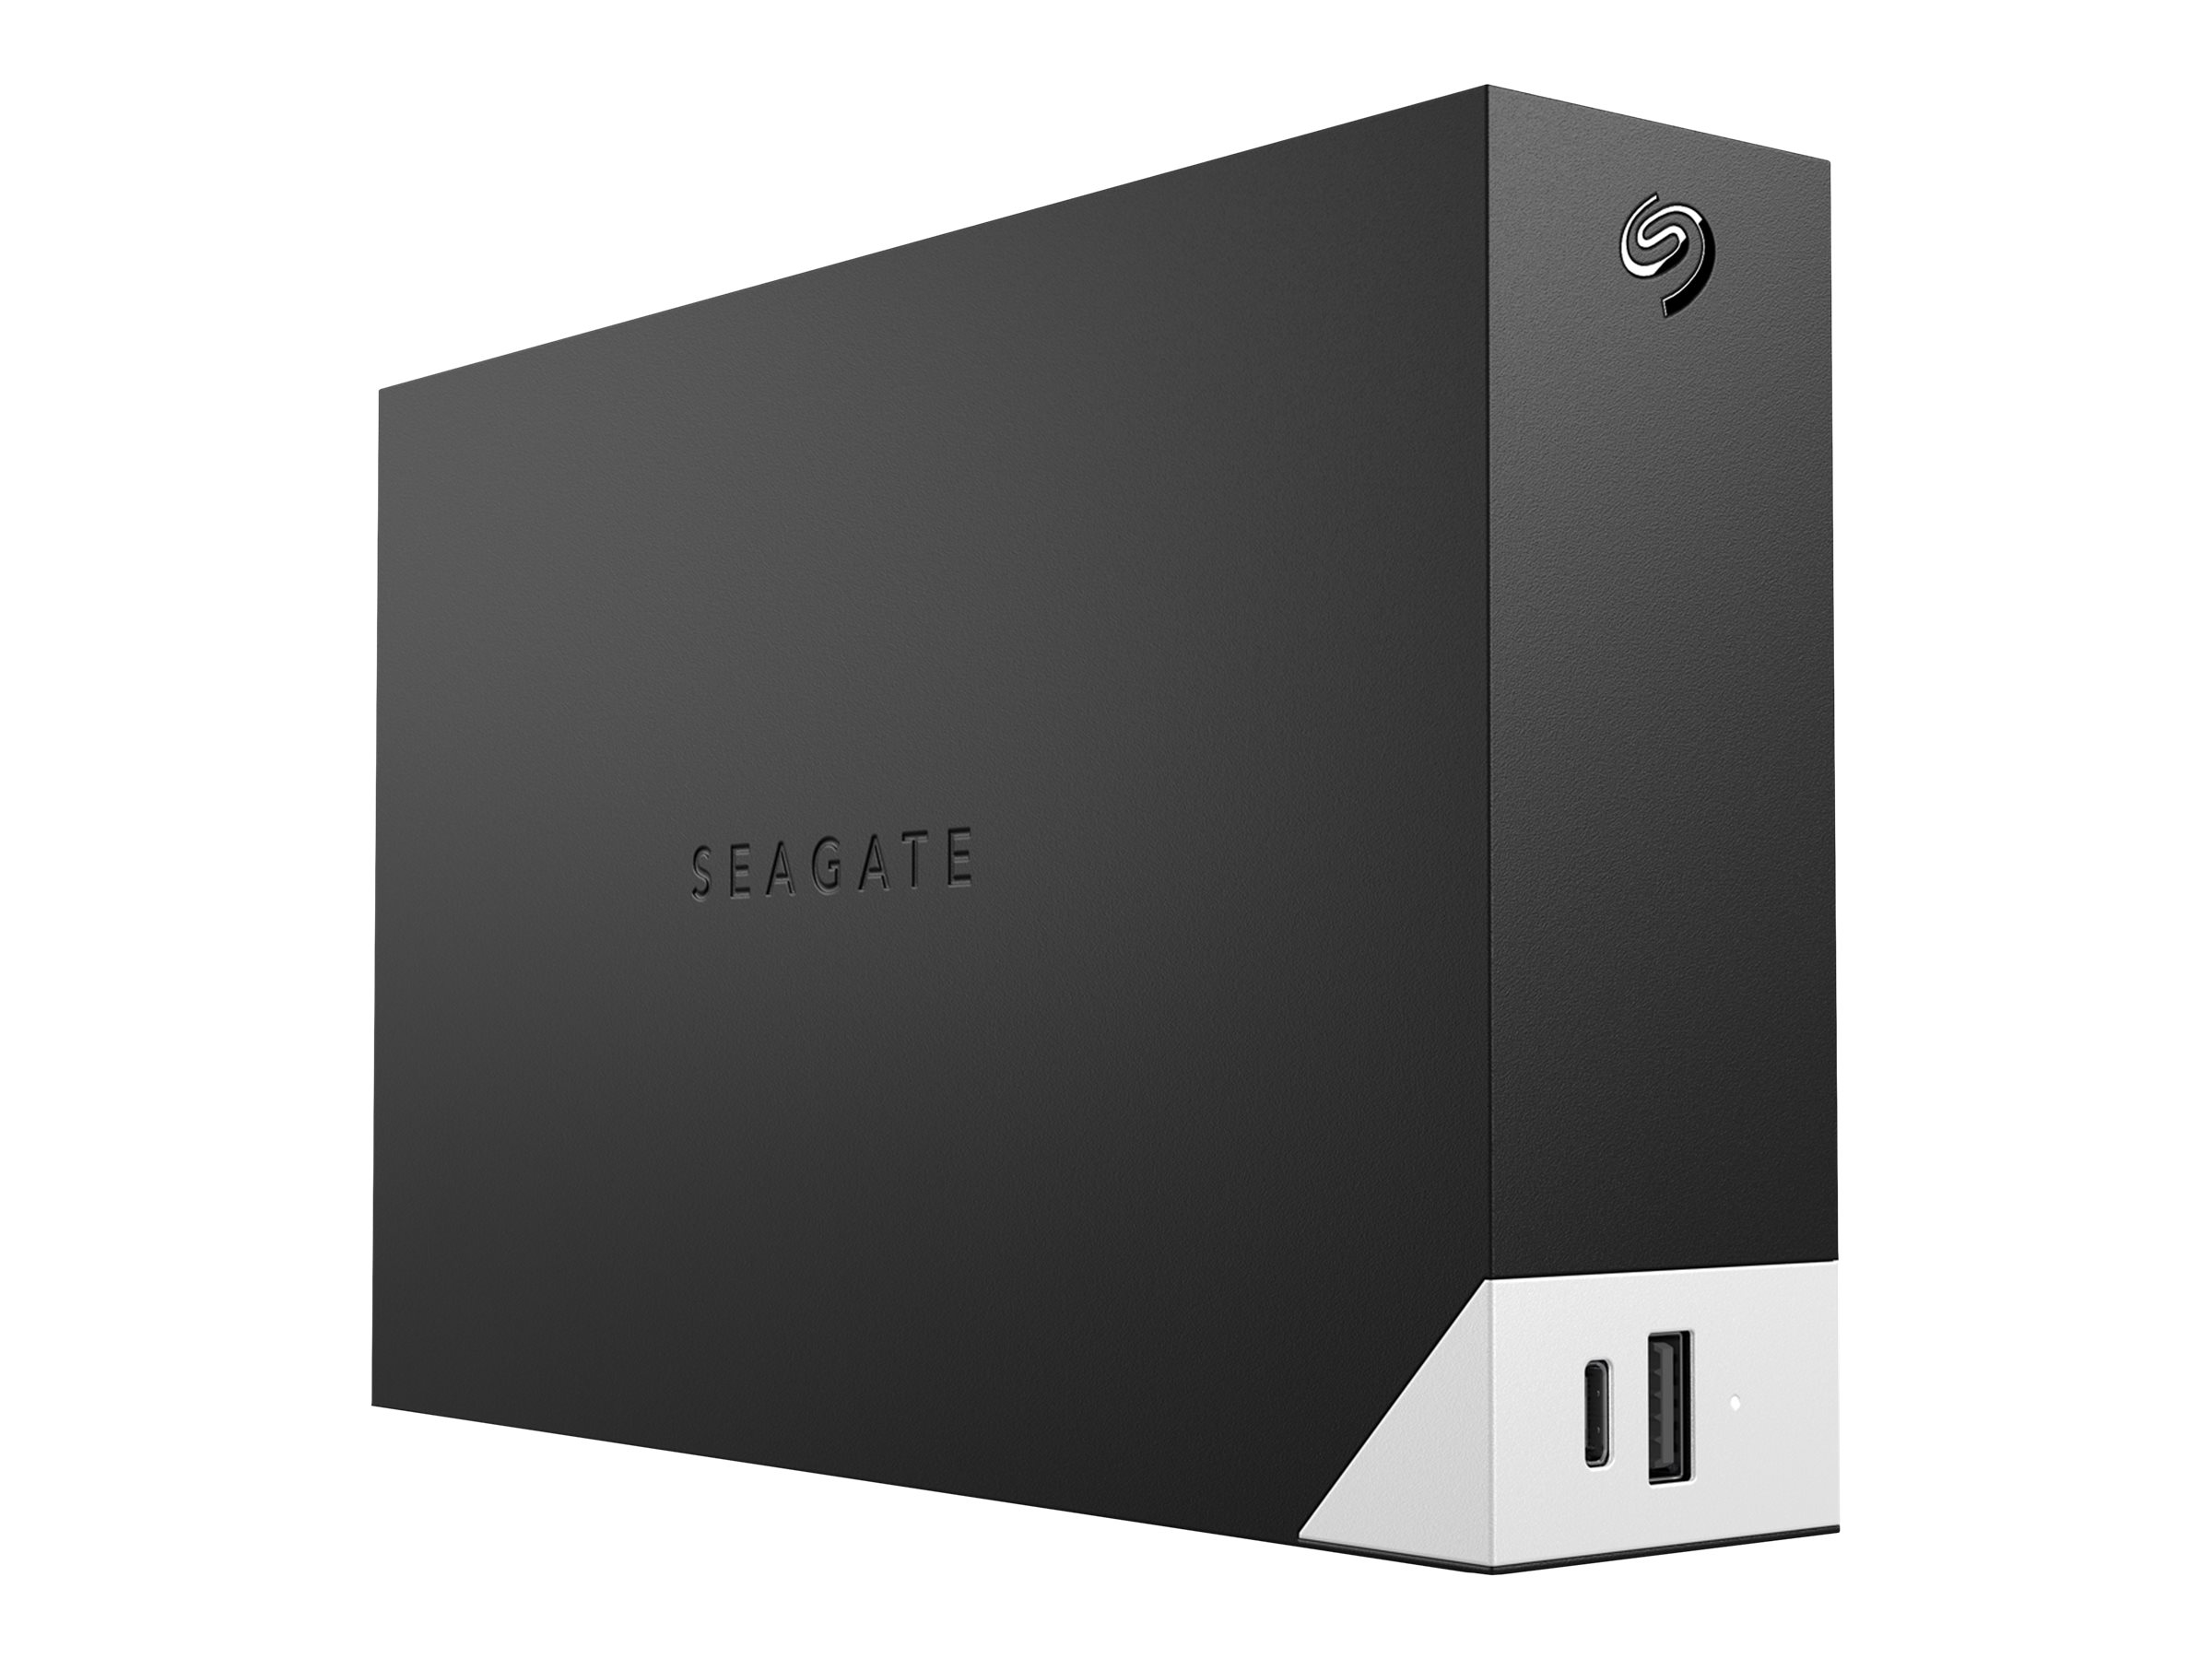 Seagate One Touch with hub STLC12000400 - Festplatte - 12 TB - extern (Stationär) - USB 3.0 - Schwarz